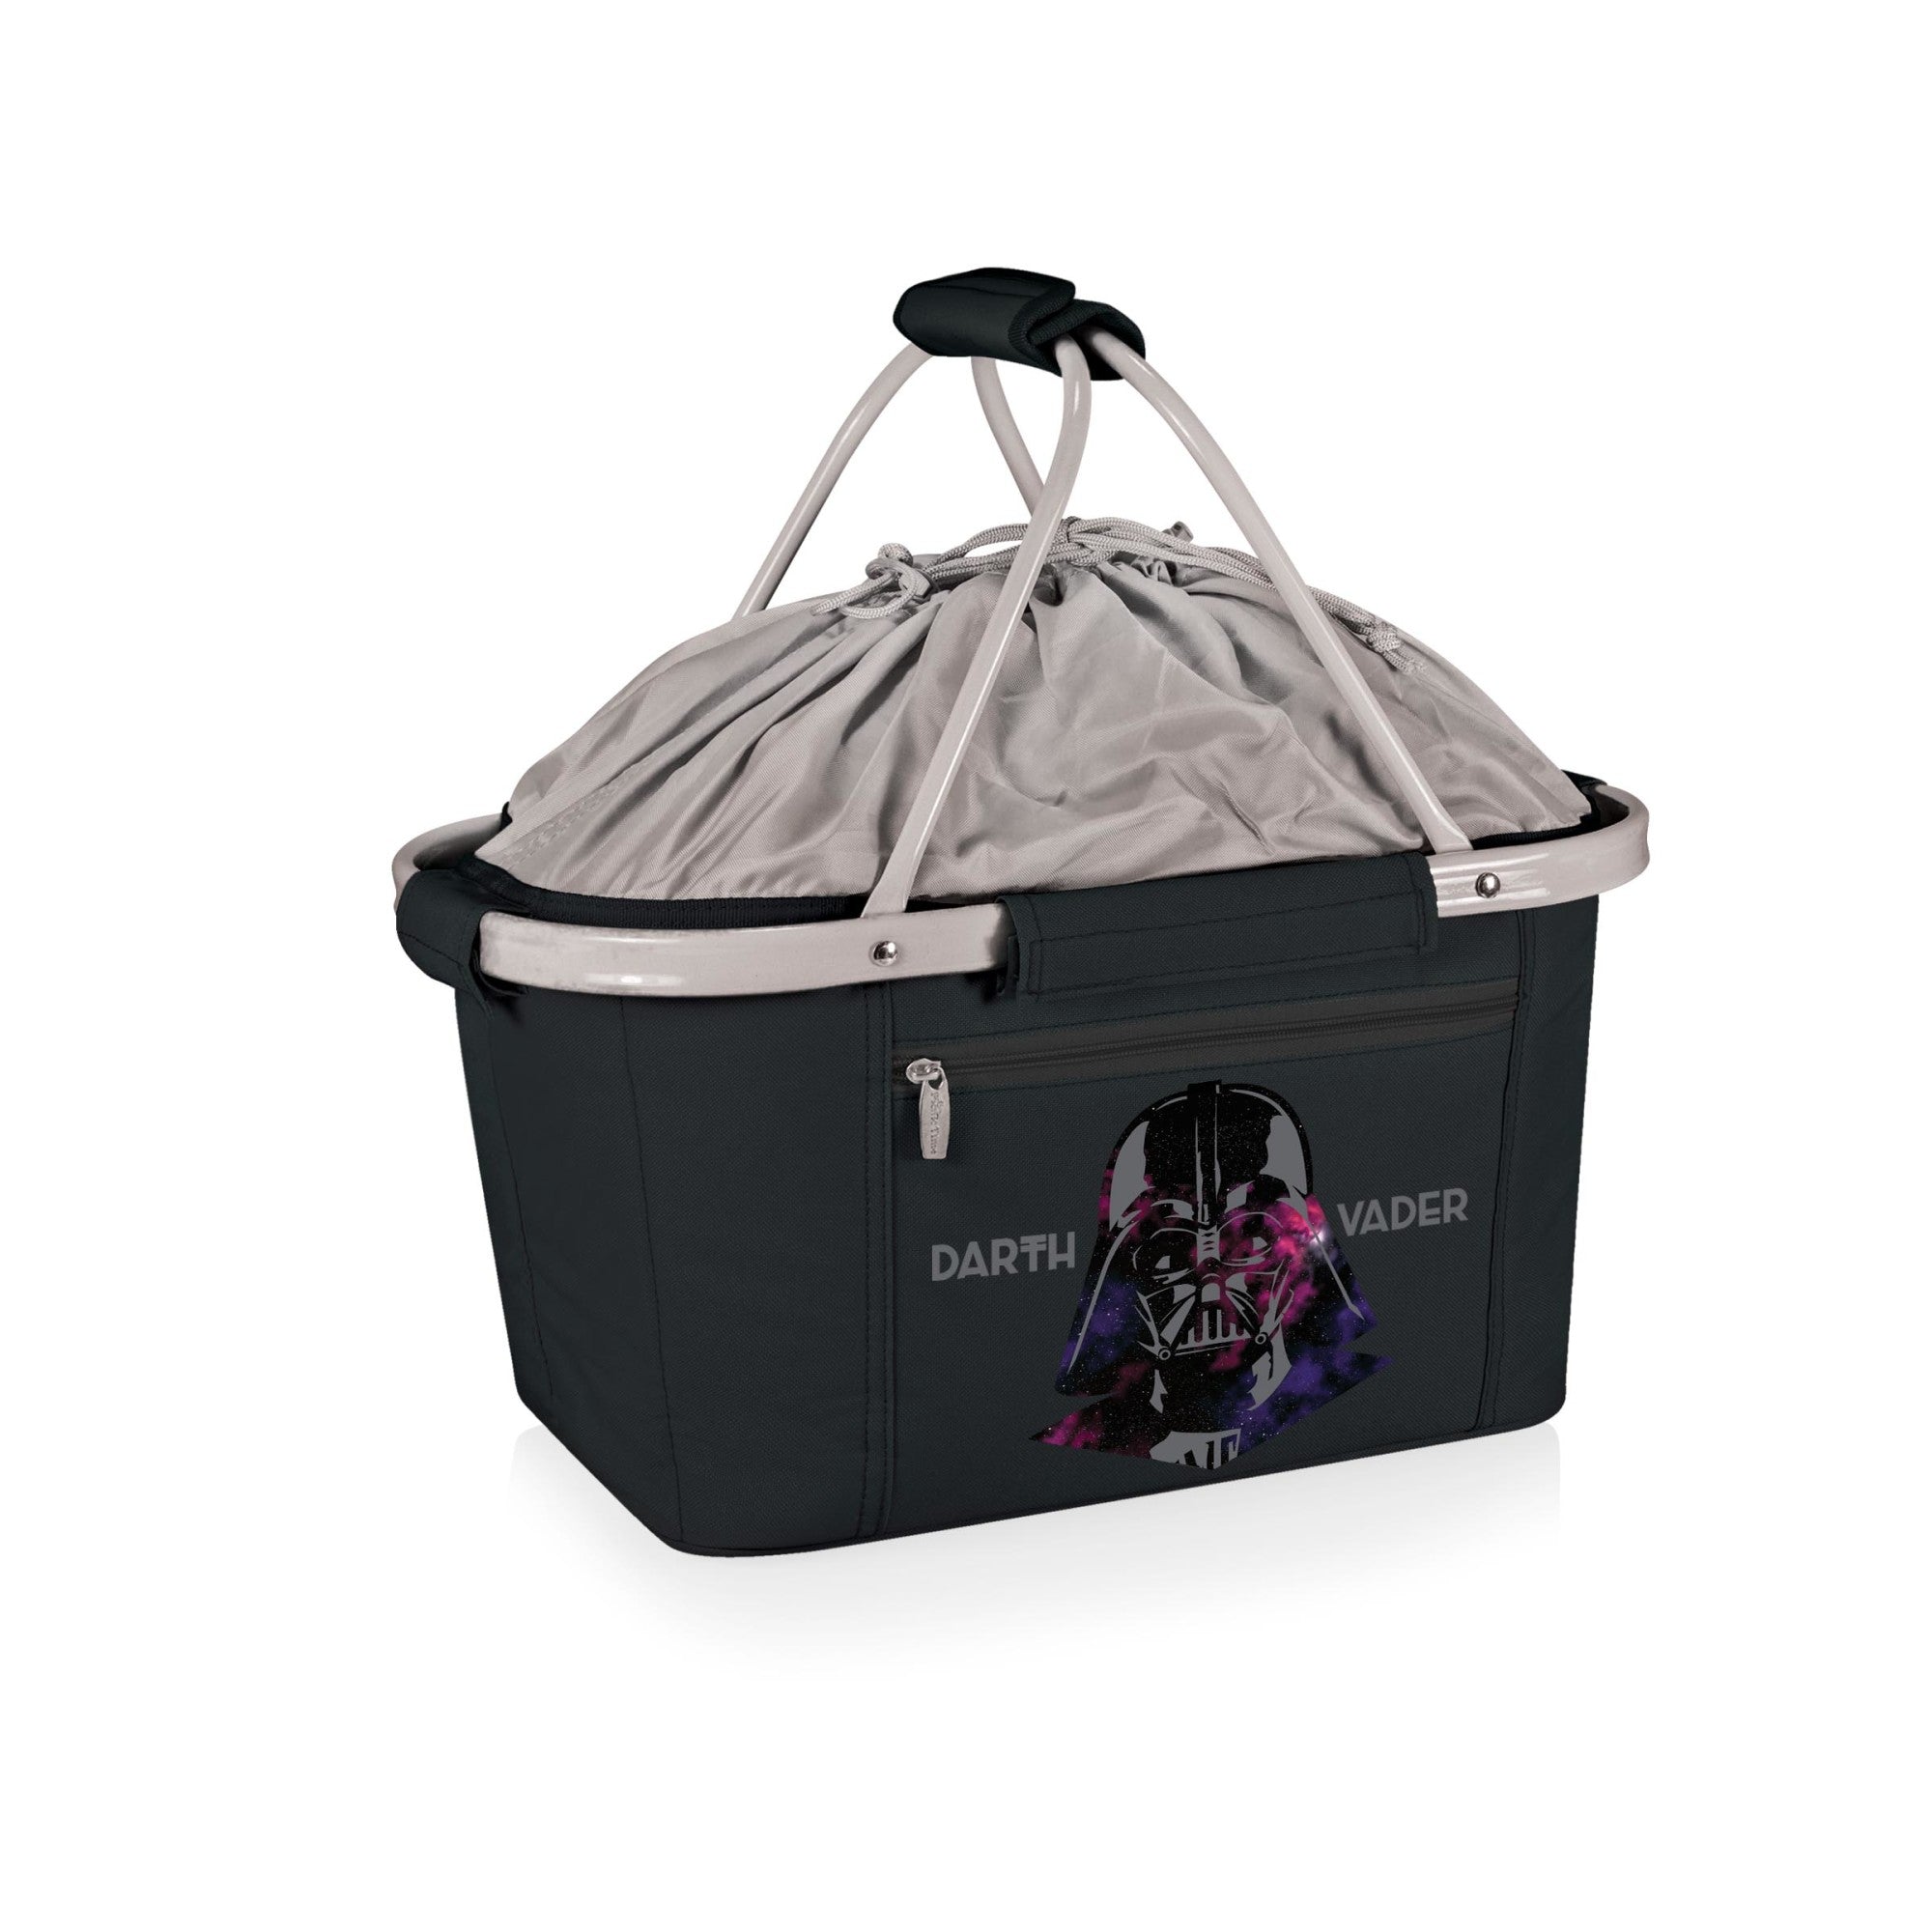 Darth Vader - Star Wars - Metro Basket Collapsible Cooler Tote